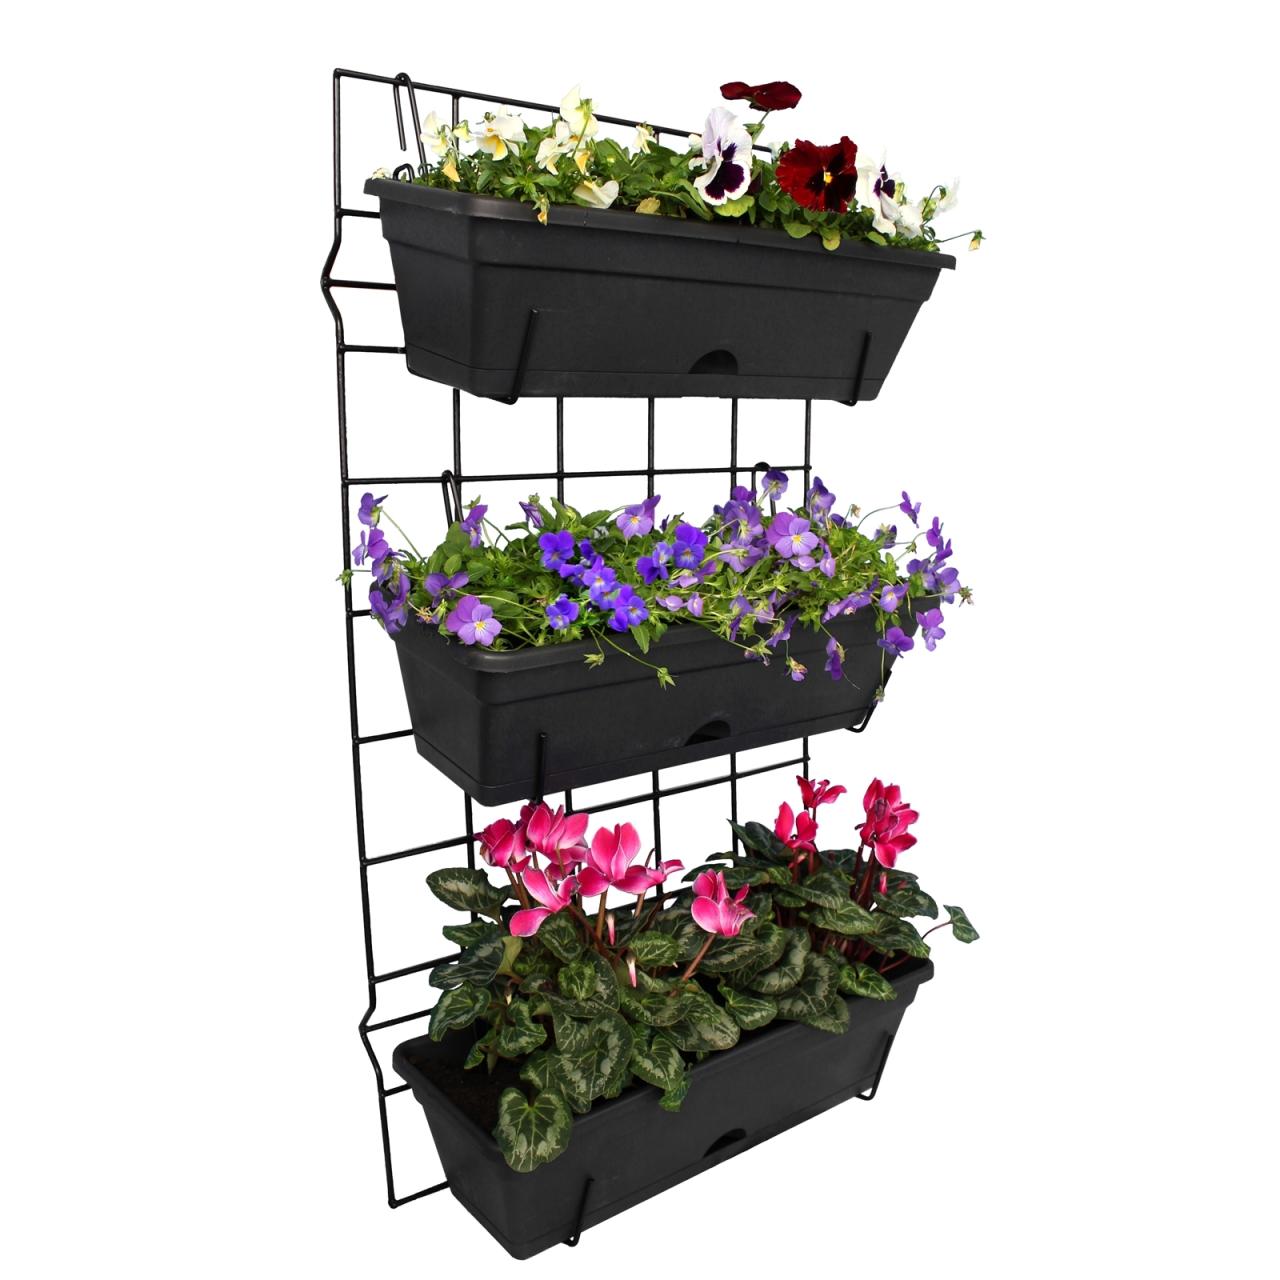 Hanging Plants Indoor | Hanging Flower Pots from Bunnings: Enhance Your Outdoor Spaces